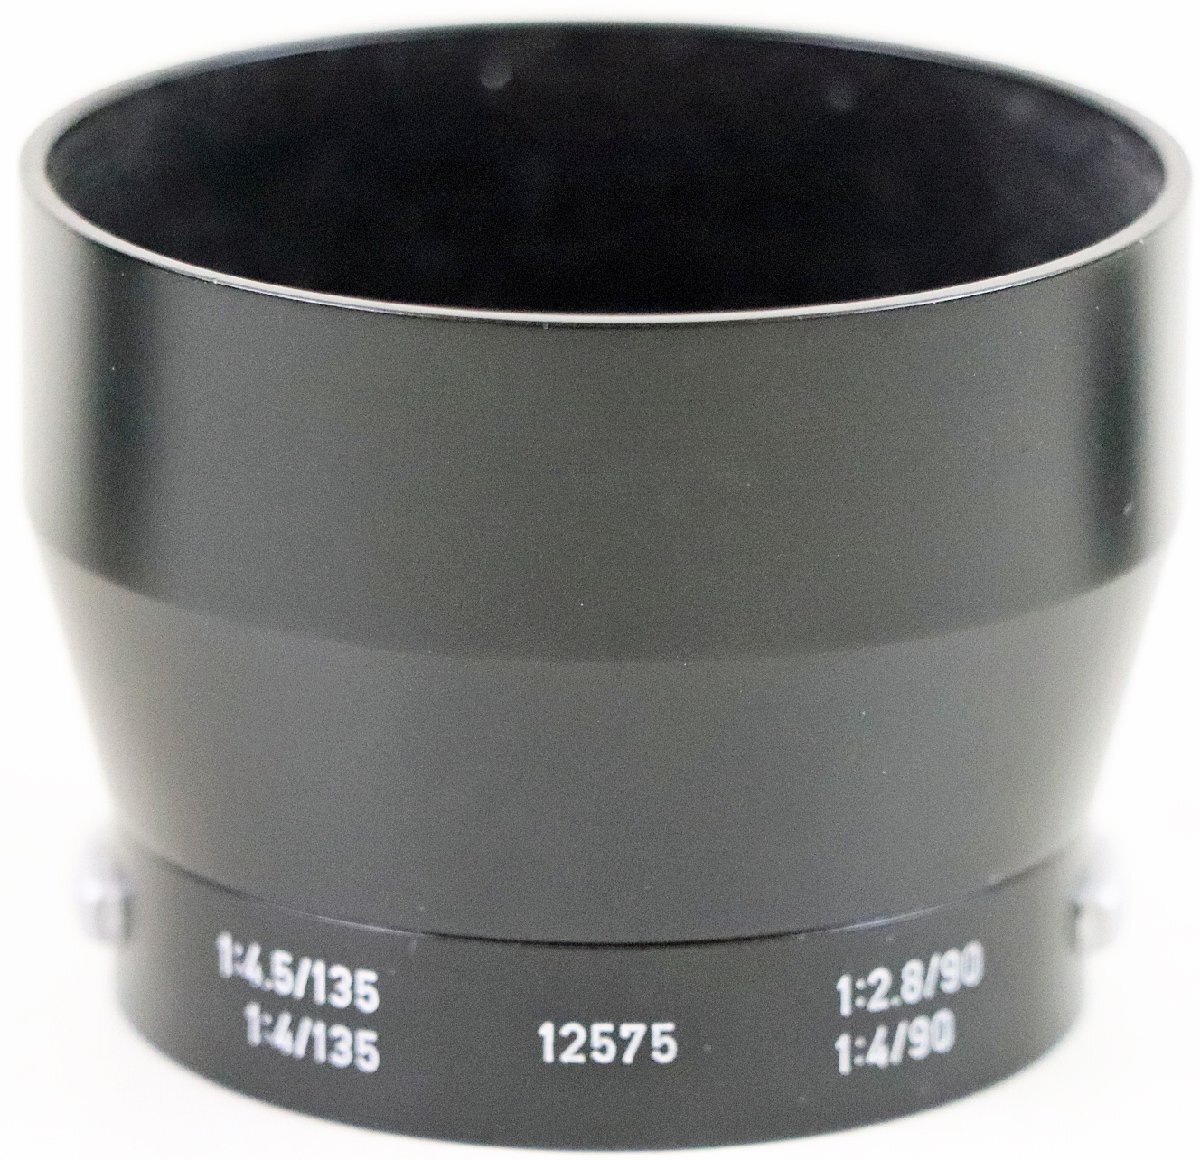 S* junk * lens Leica /LEITZ WETZLAR ELMARIT 90mm f/2.8 lens cap / mount cap / hood attaching * cap . crack have 